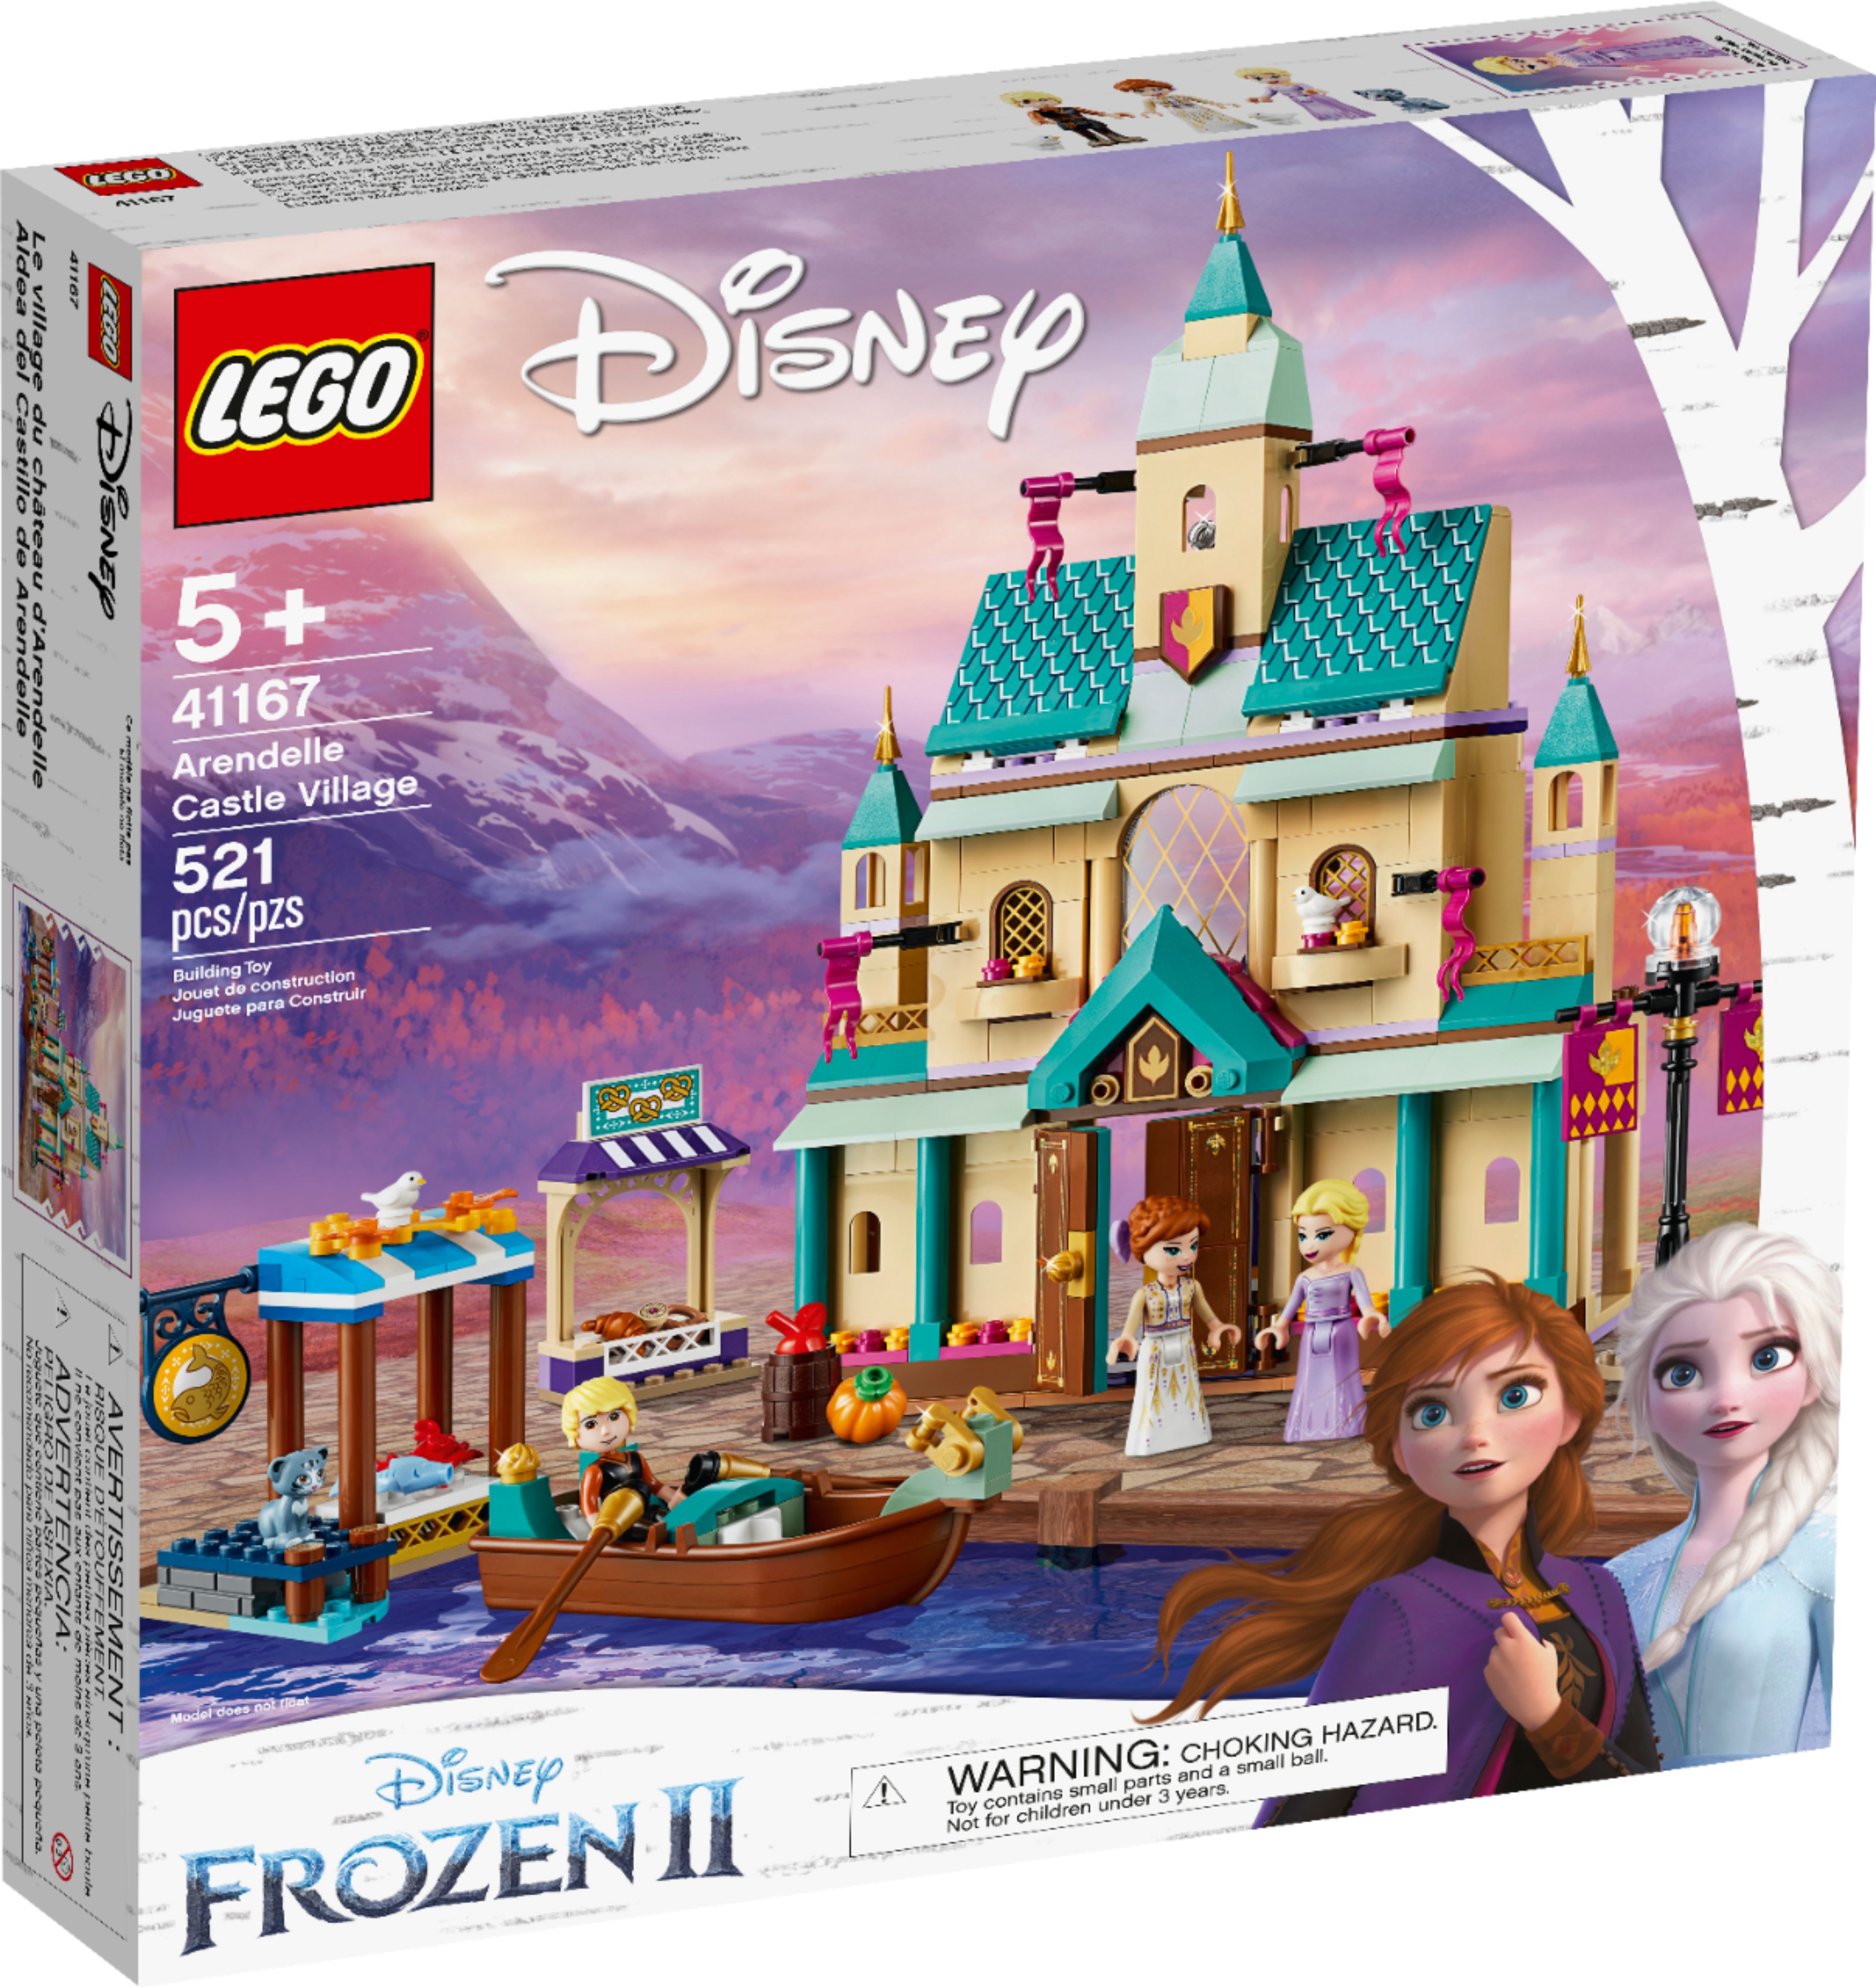 Angle View: LEGO - Disney Frozen II Arendelle Castle Village 41167